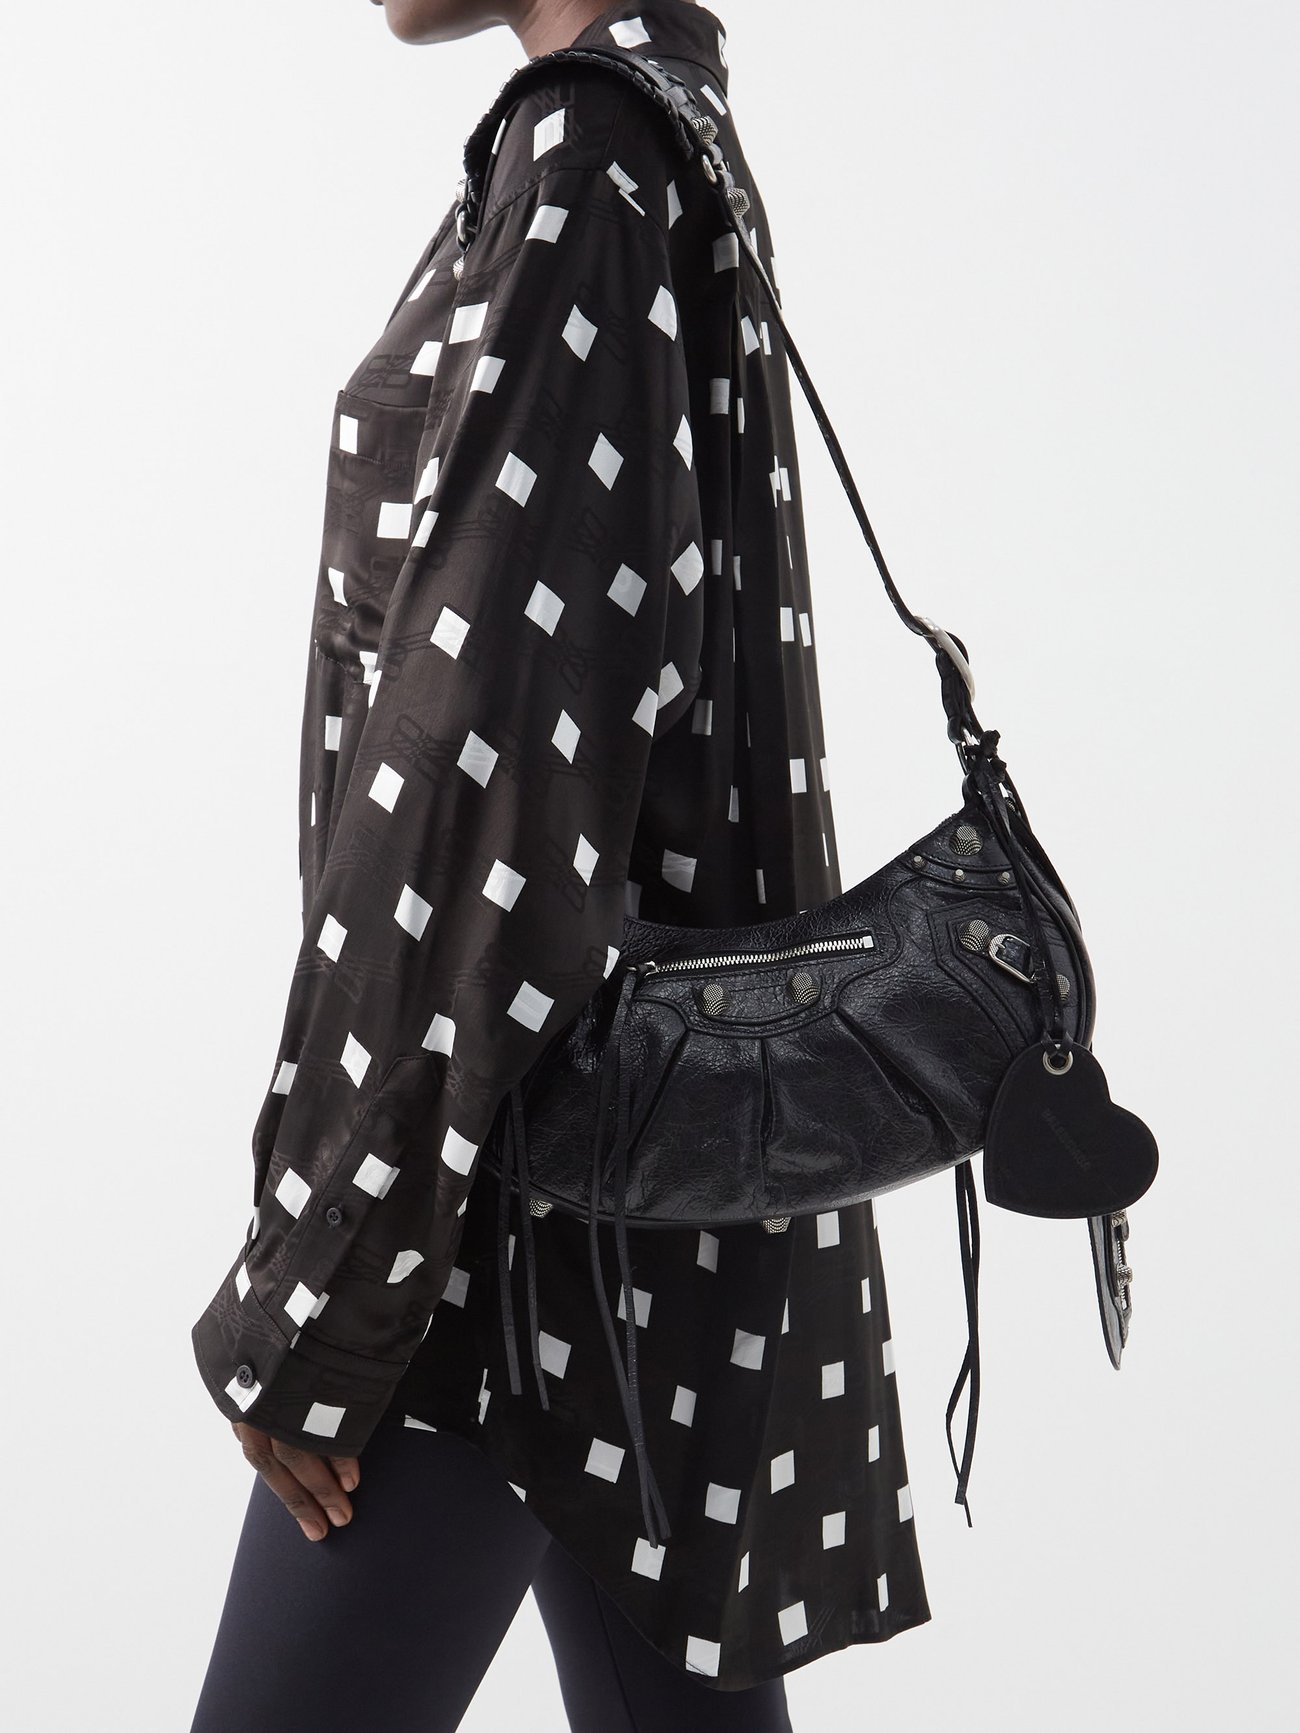 Balenciaga Bb Small Crinkled-leather Shoulder Bag in Black